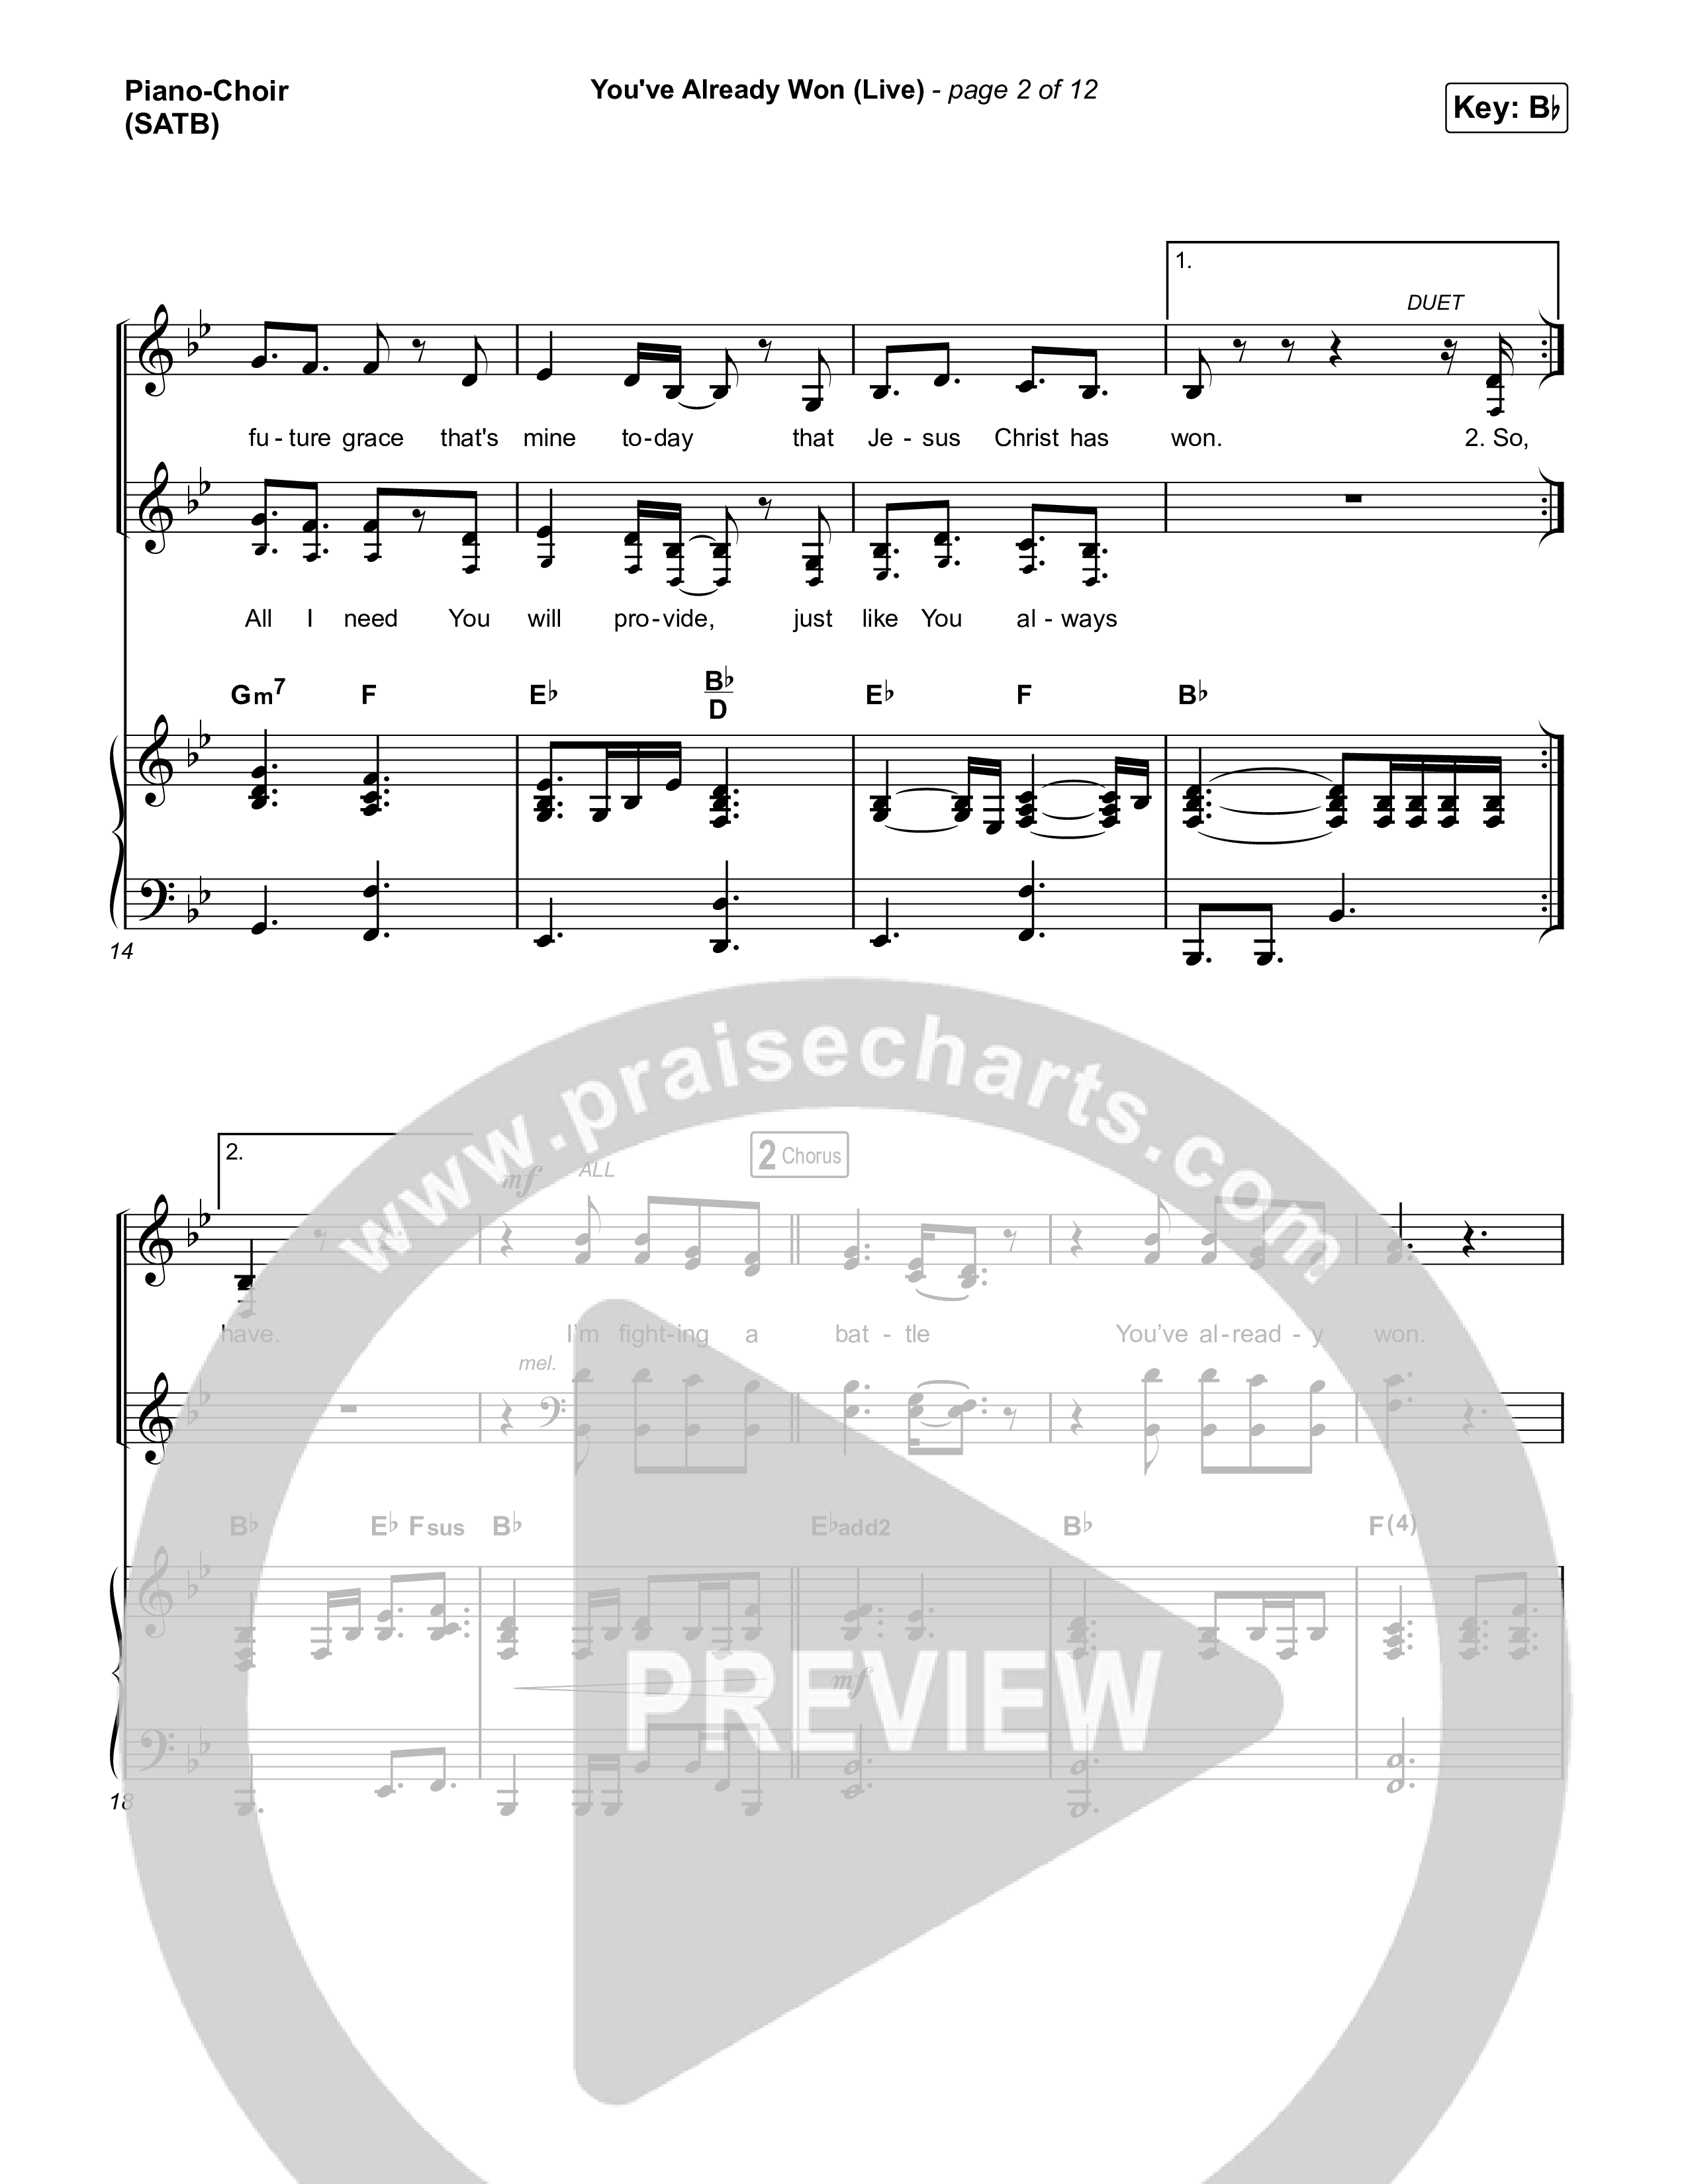 You've Already Won (Live) Sheet Music PDF (Shane & Shane) PraiseCharts